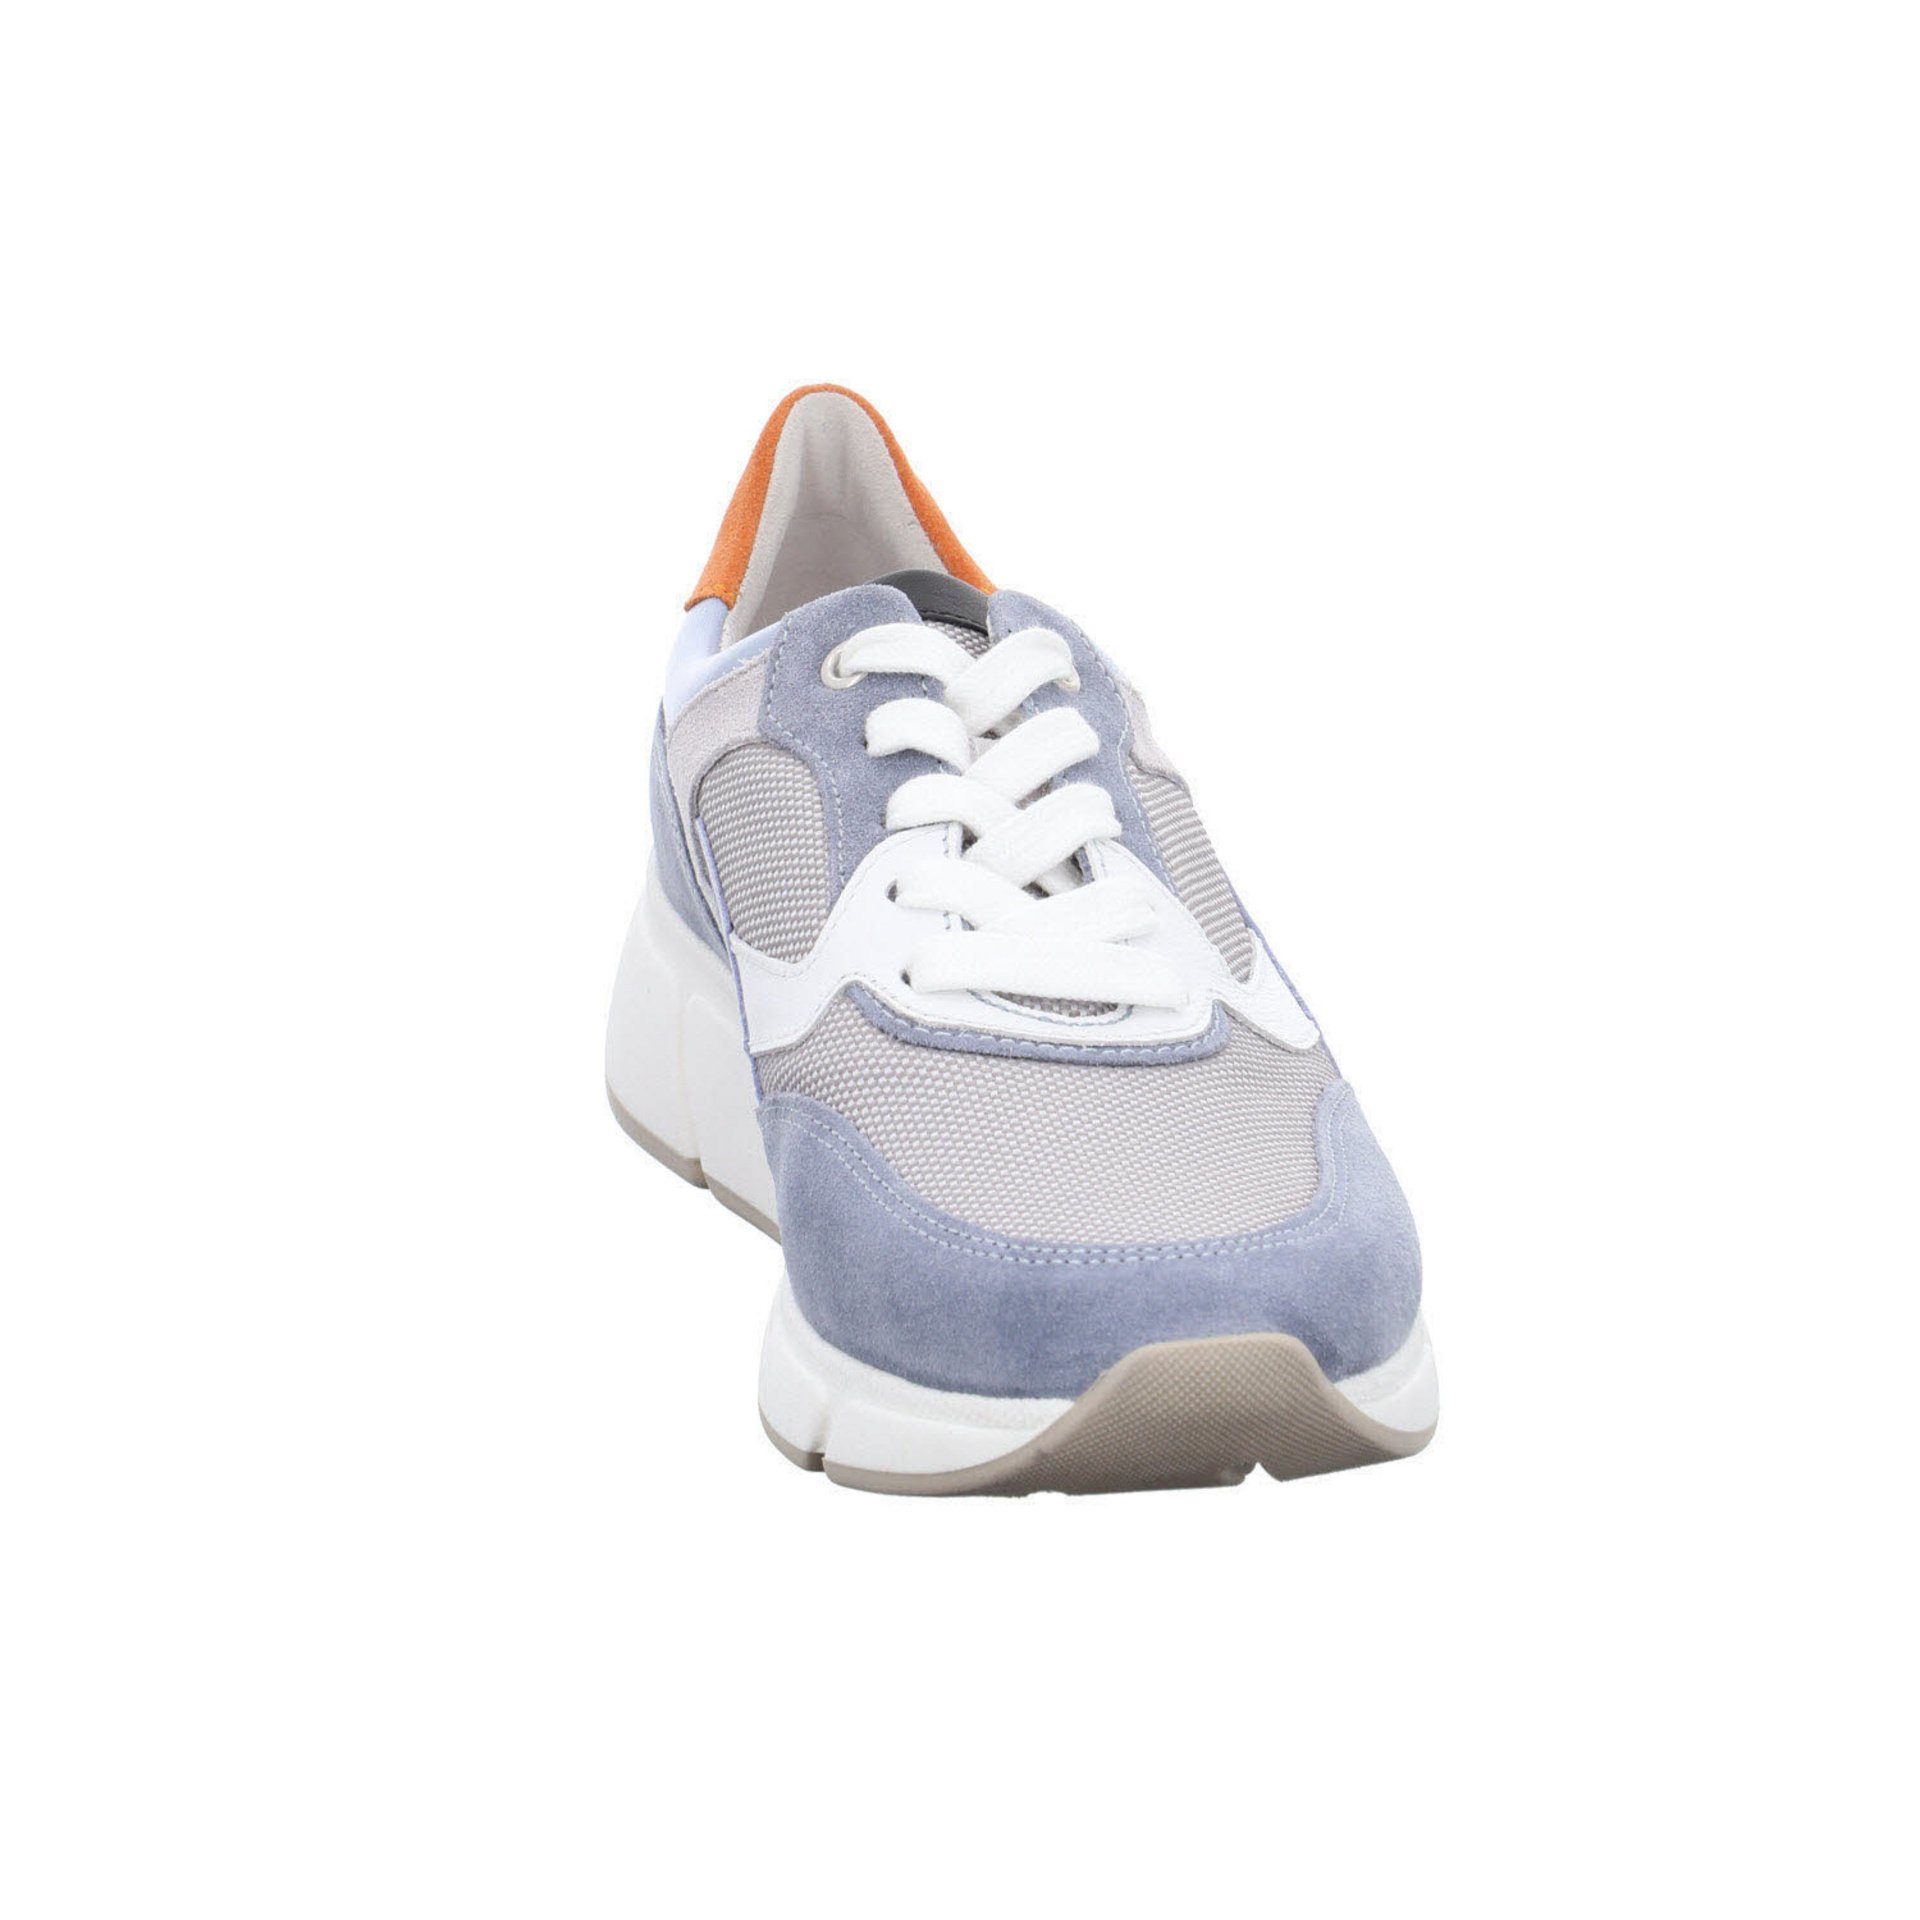 Sneaker Gabor Leder-/Textilkombination Schuhe Sneaker Sneaker cielo/grau/orange Florenz Damen